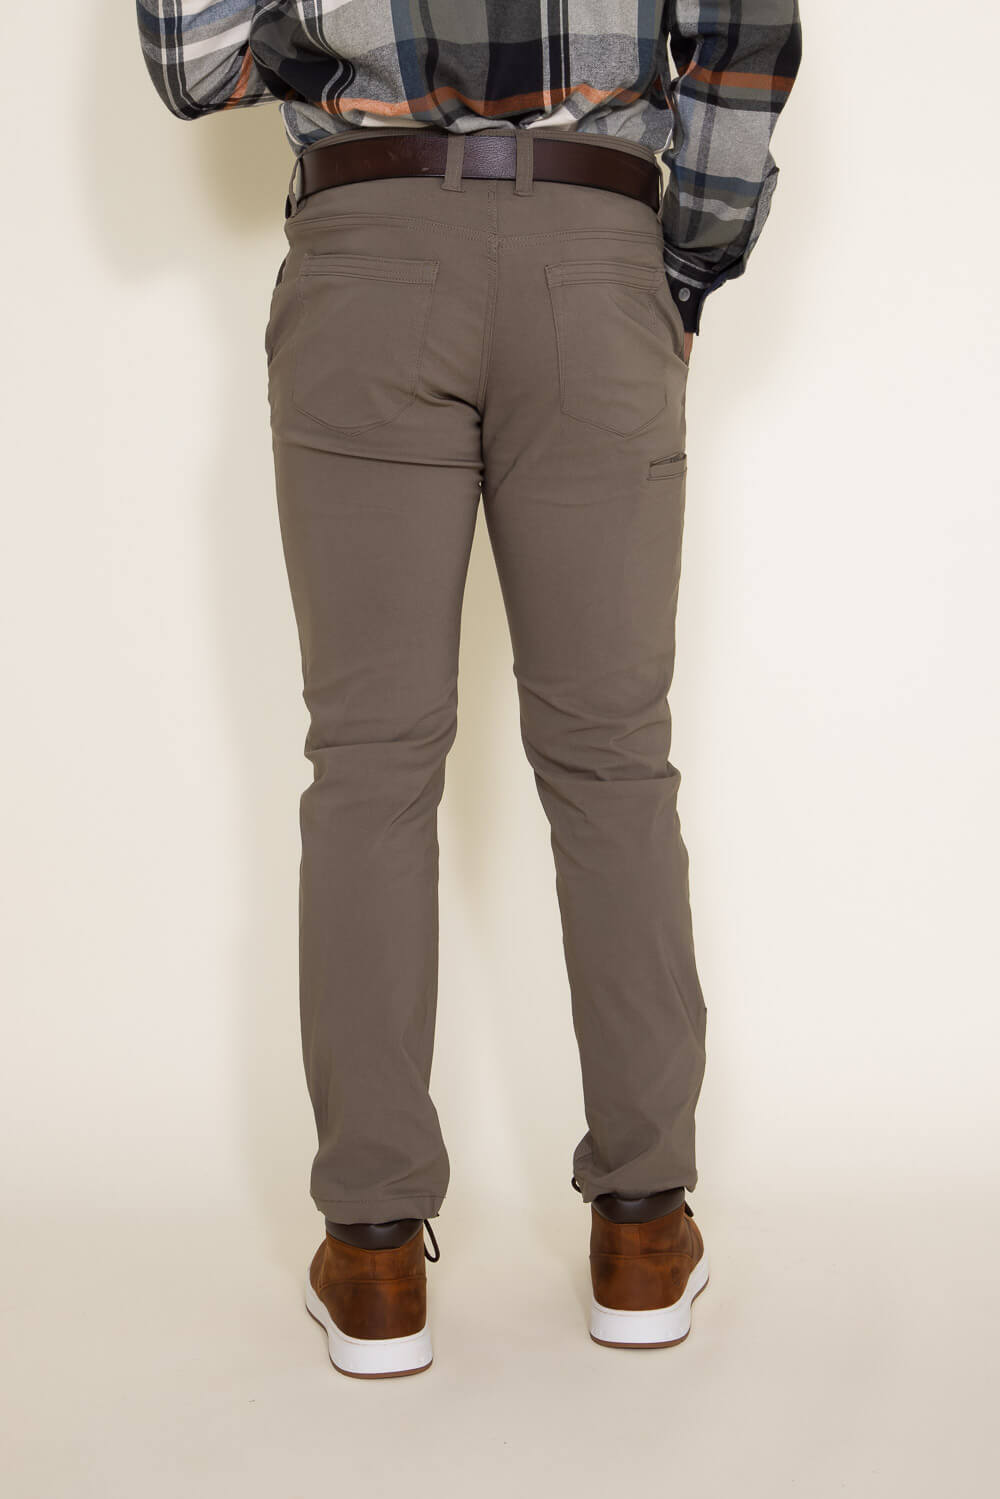 Weatherproof Vintage Faille Trouser Pants for Men in Brown/Green